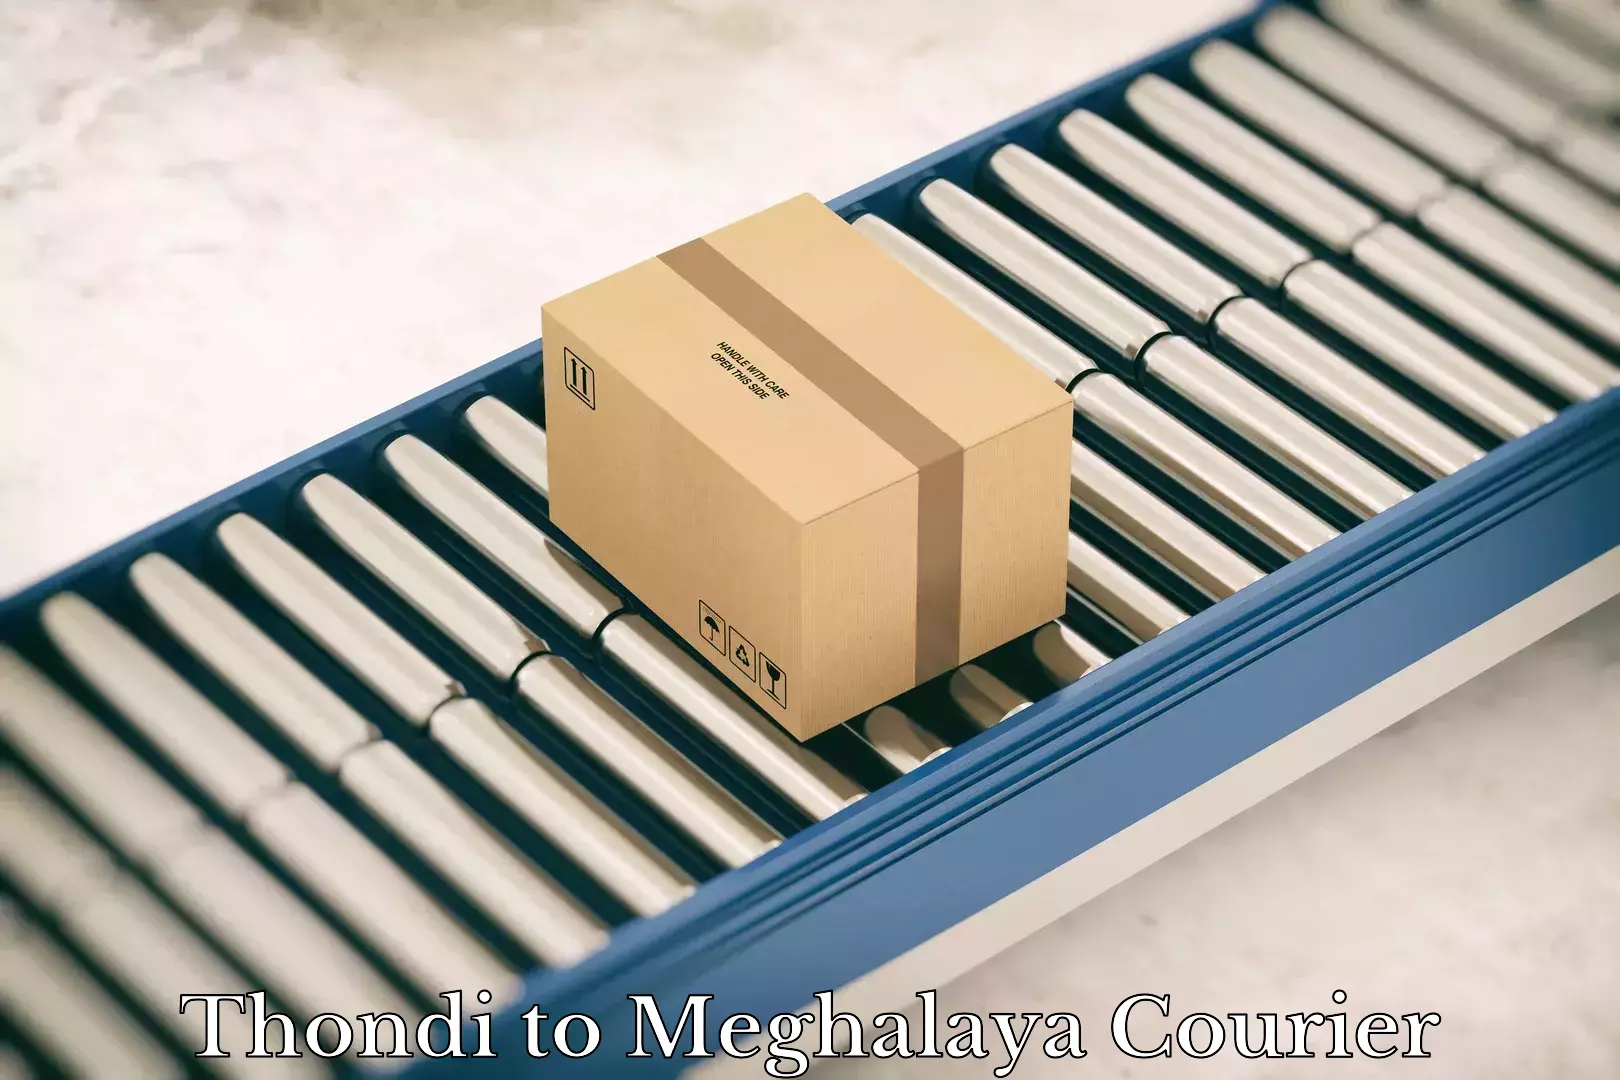 High-capacity parcel service Thondi to Meghalaya